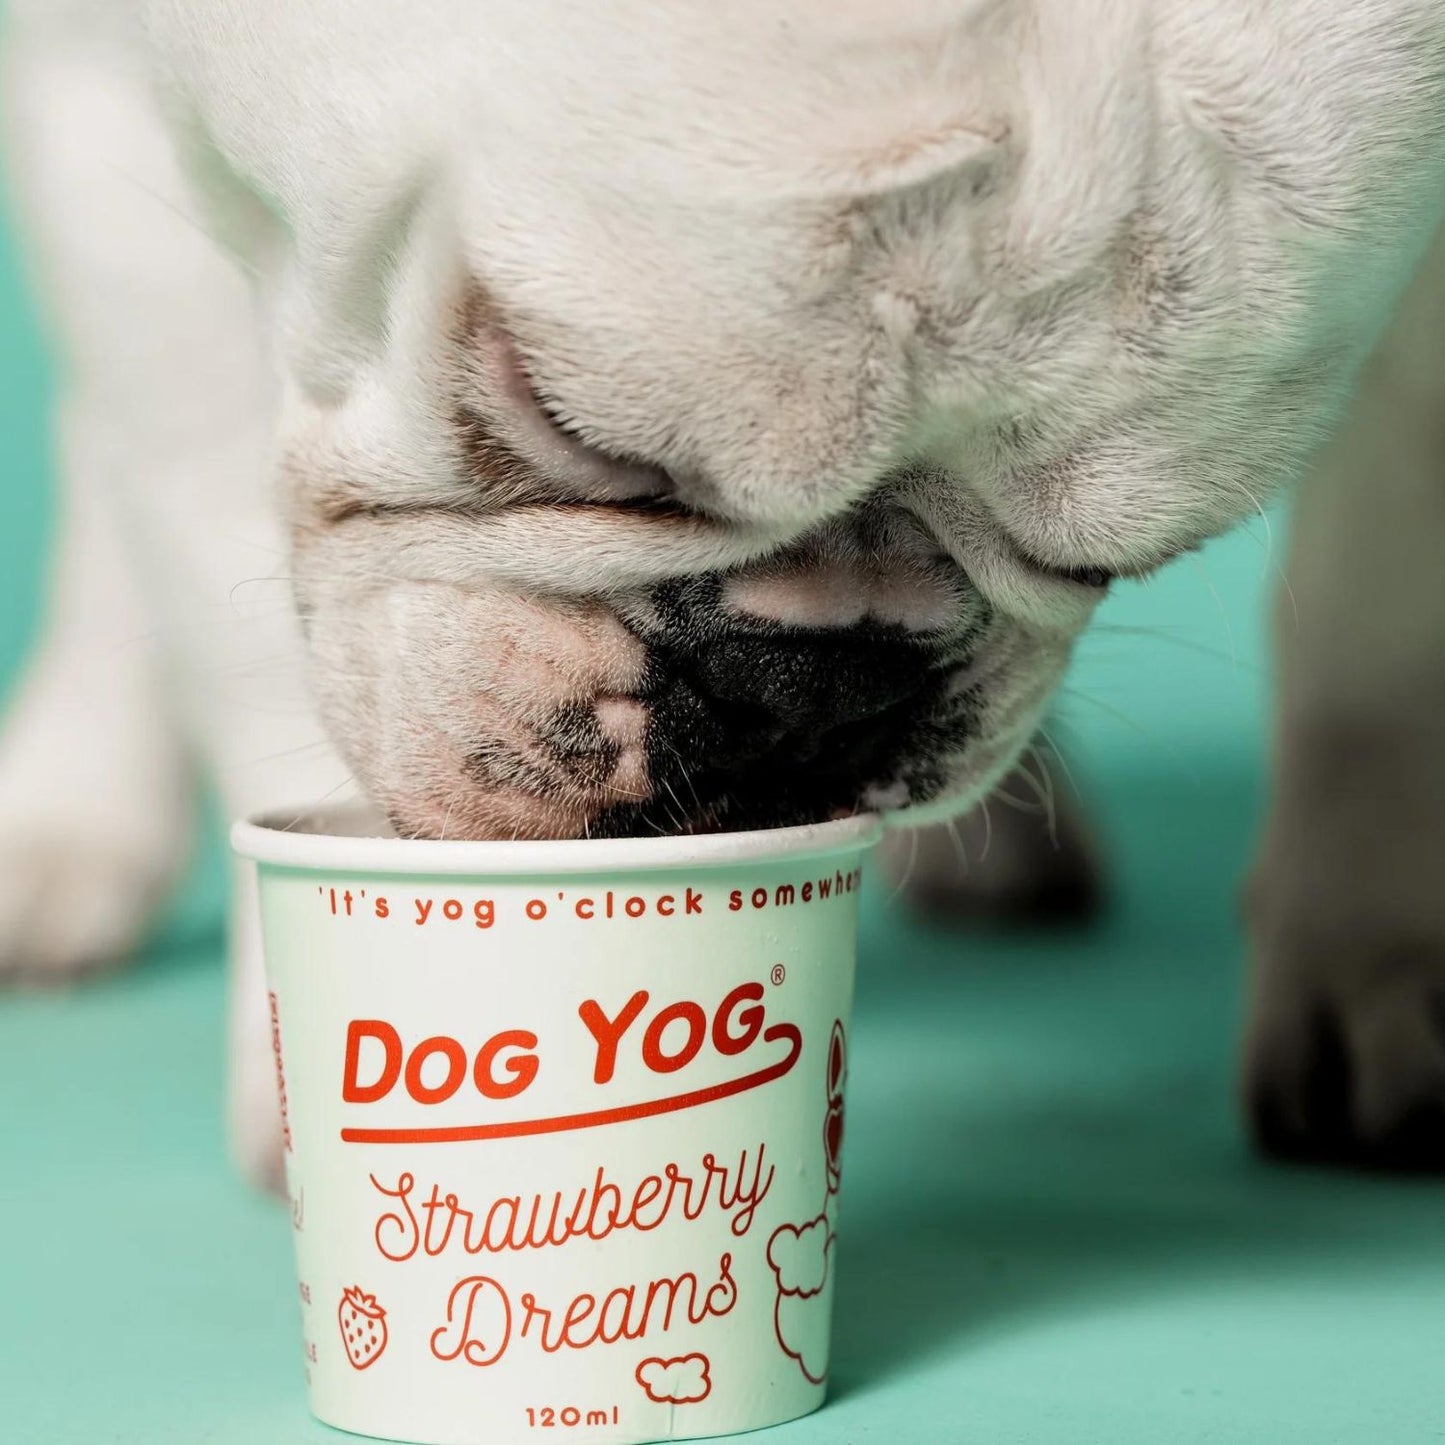 Strawberry Dreams Dog Ice Cream